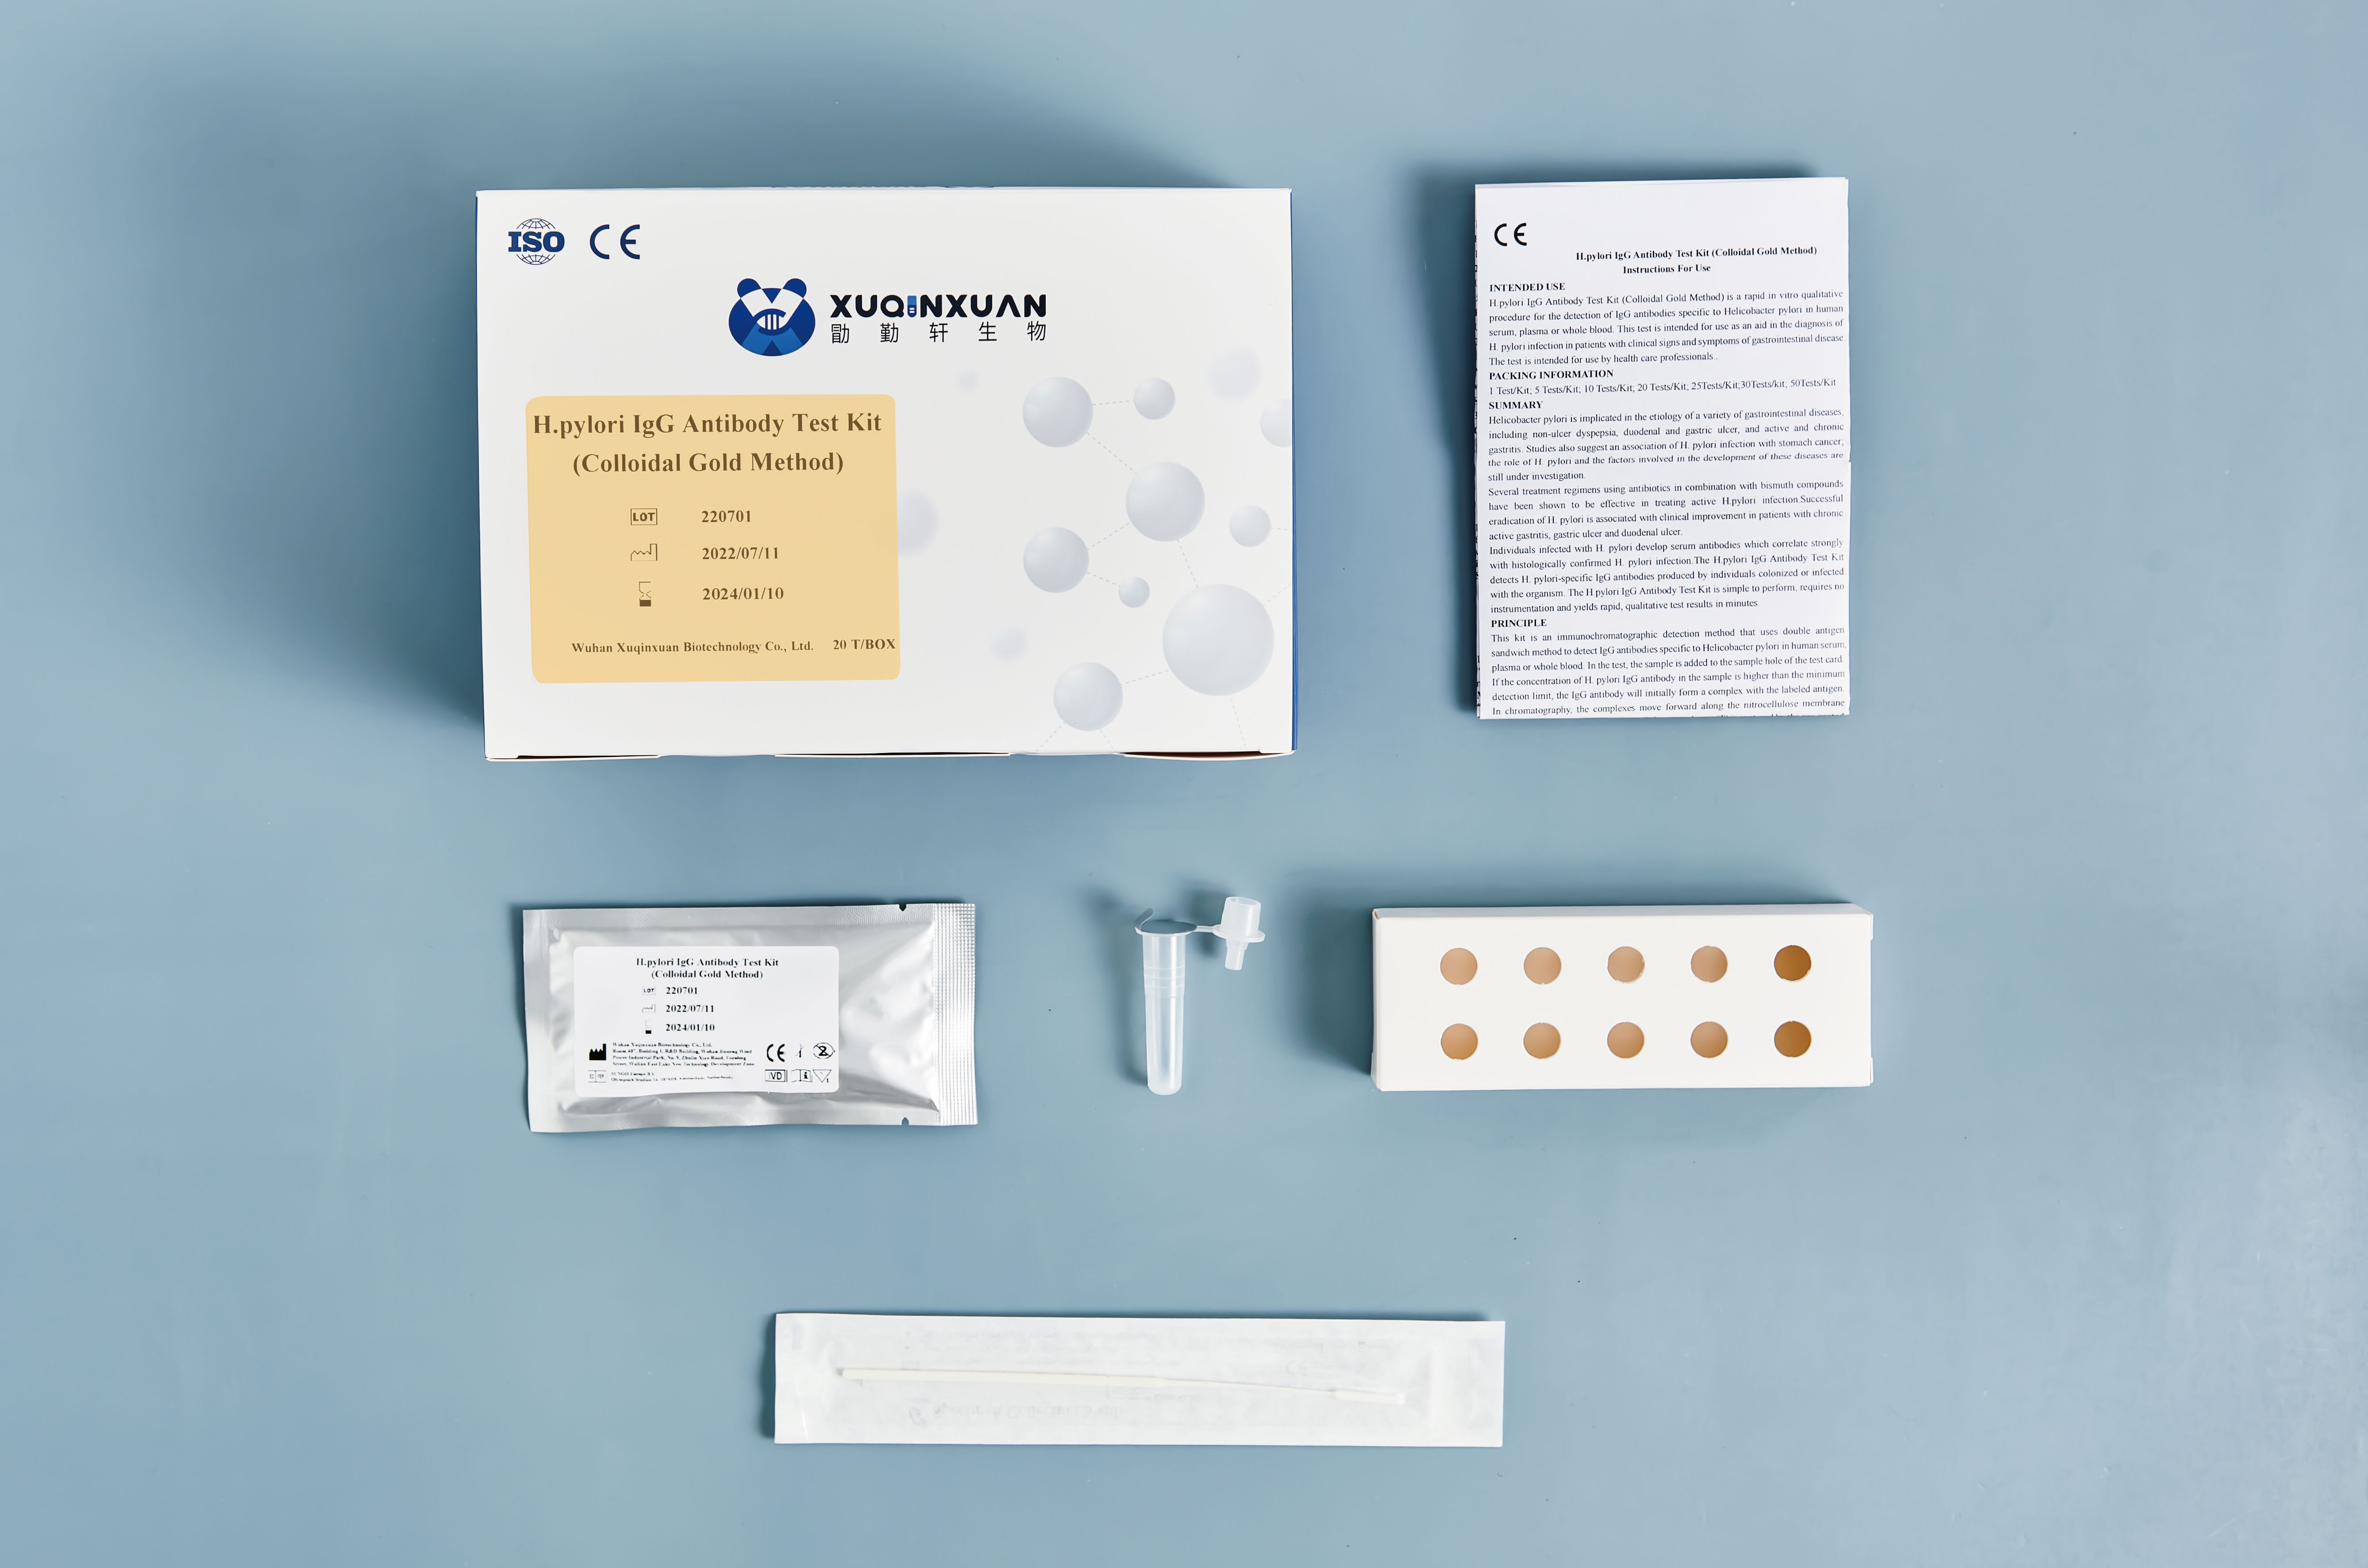 H.pylori IgG Antibody Test Kit (Colloidal Gold Method) 